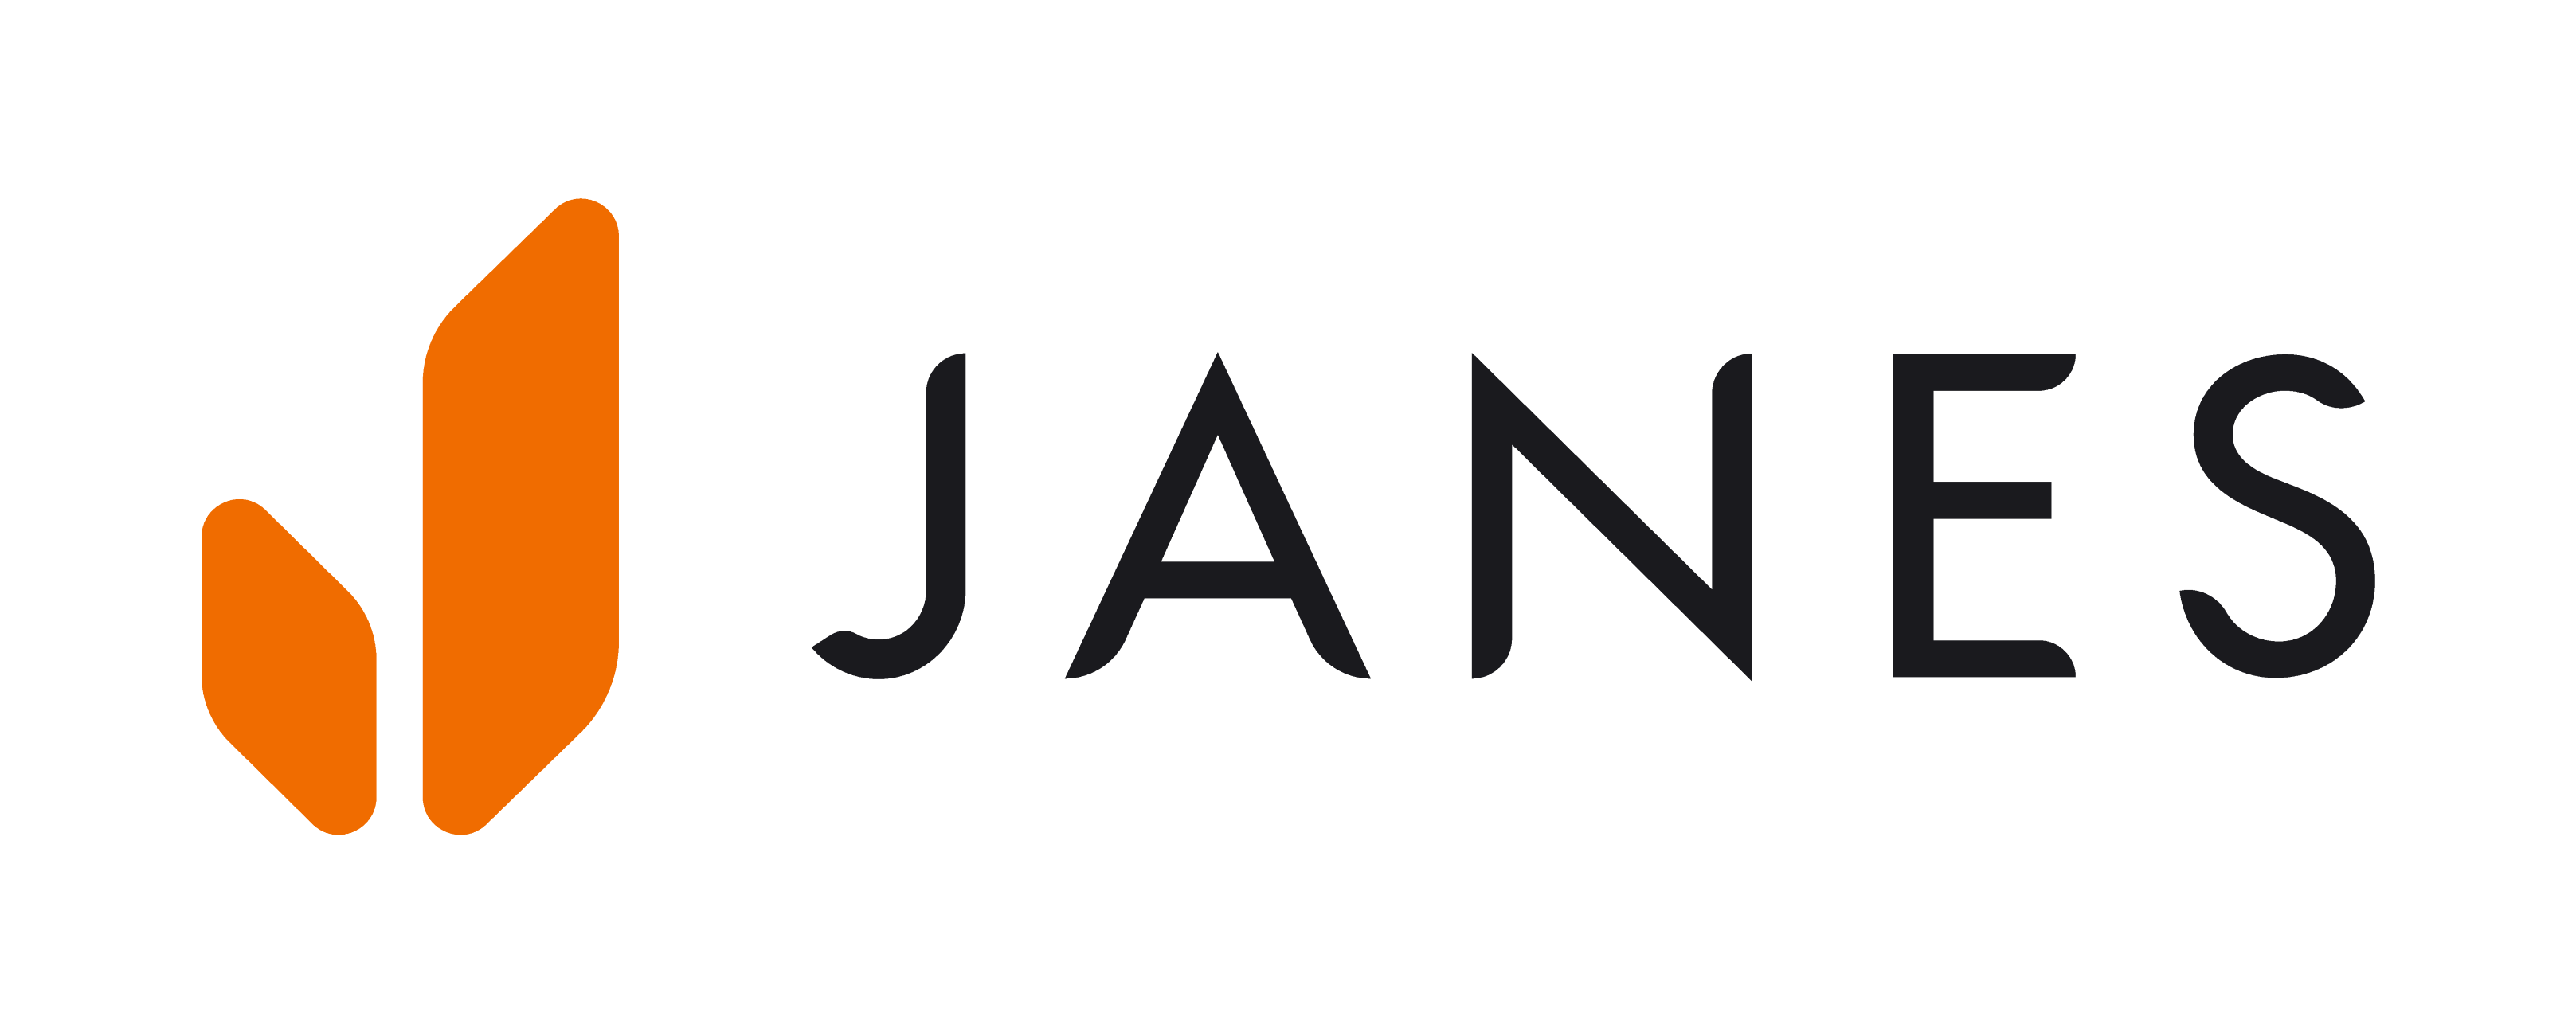 Janes logo